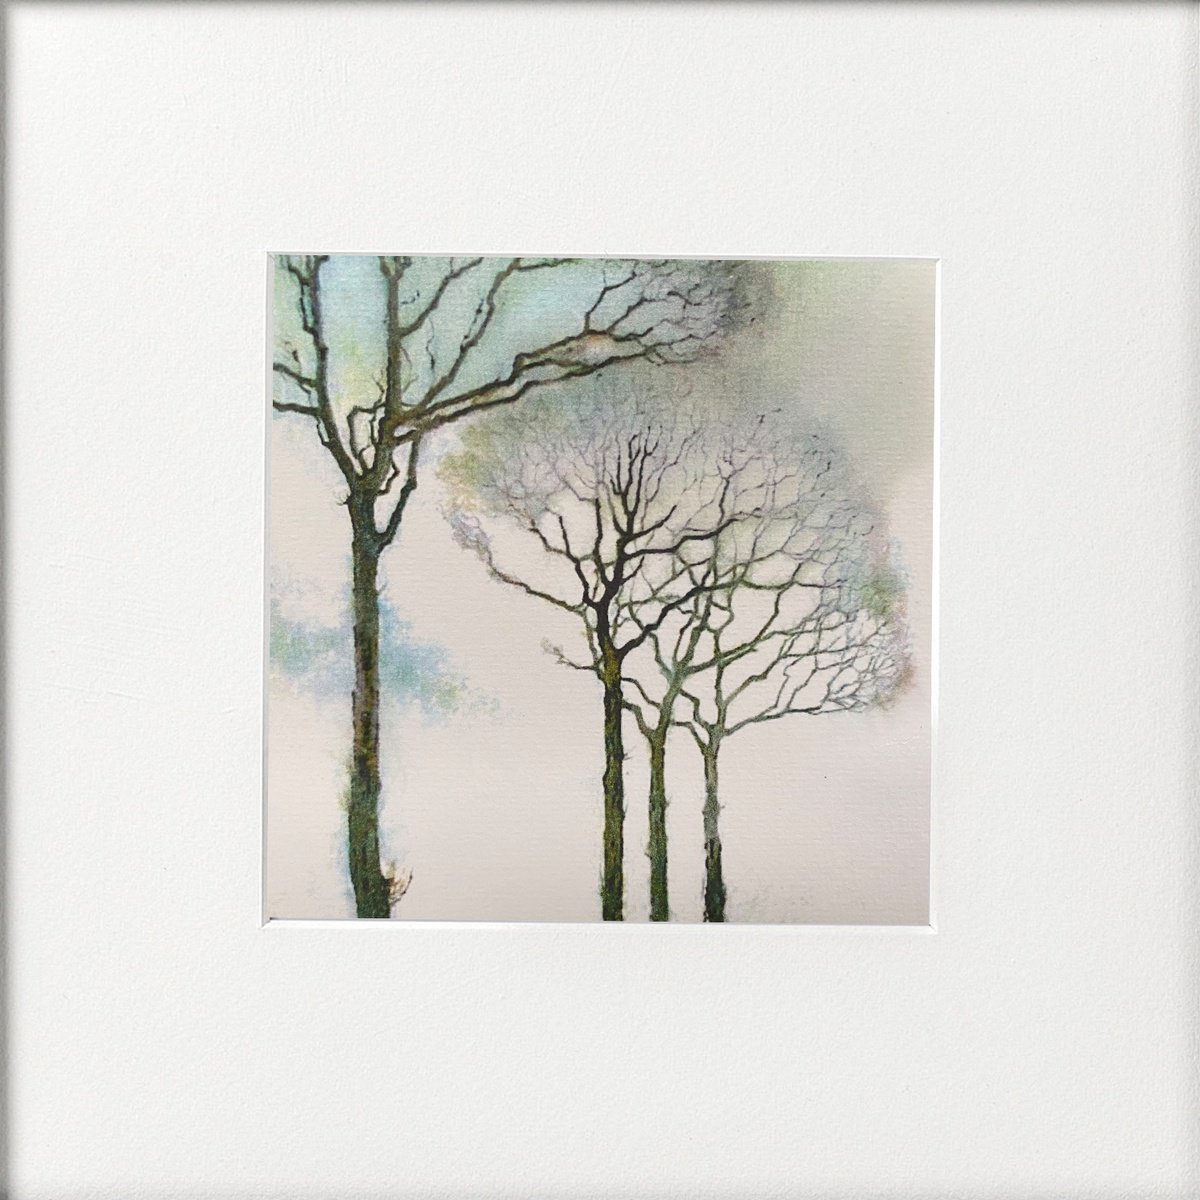 Monochrome - Winter trees by Teresa Tanner